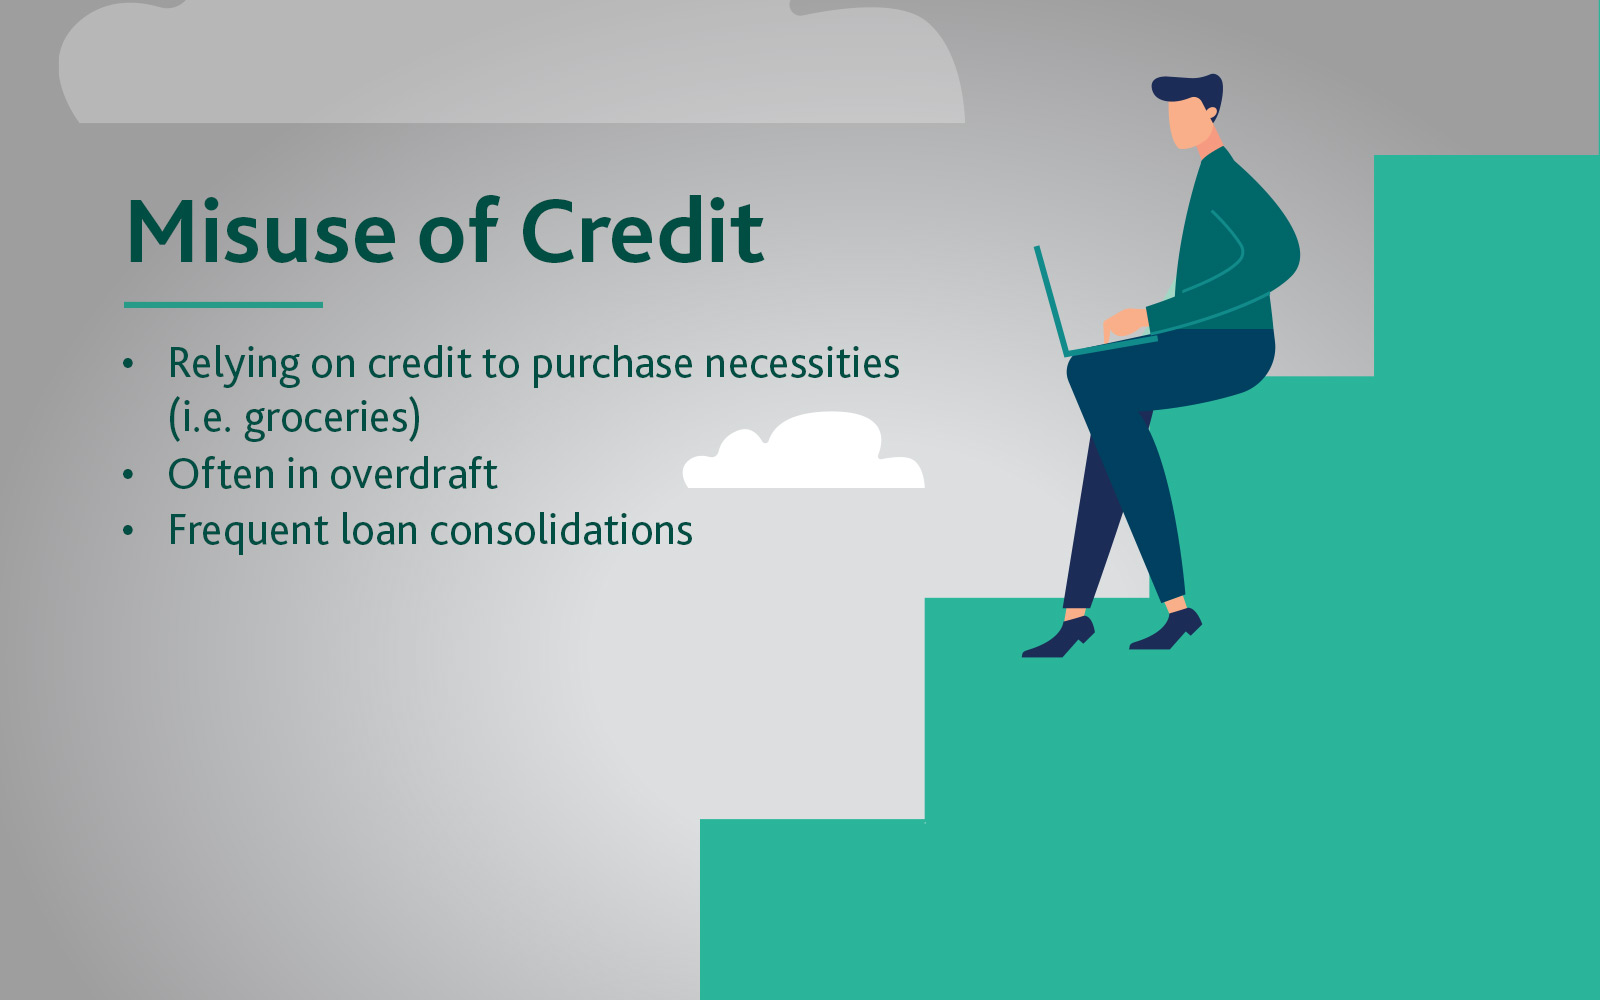 Misuse of credit